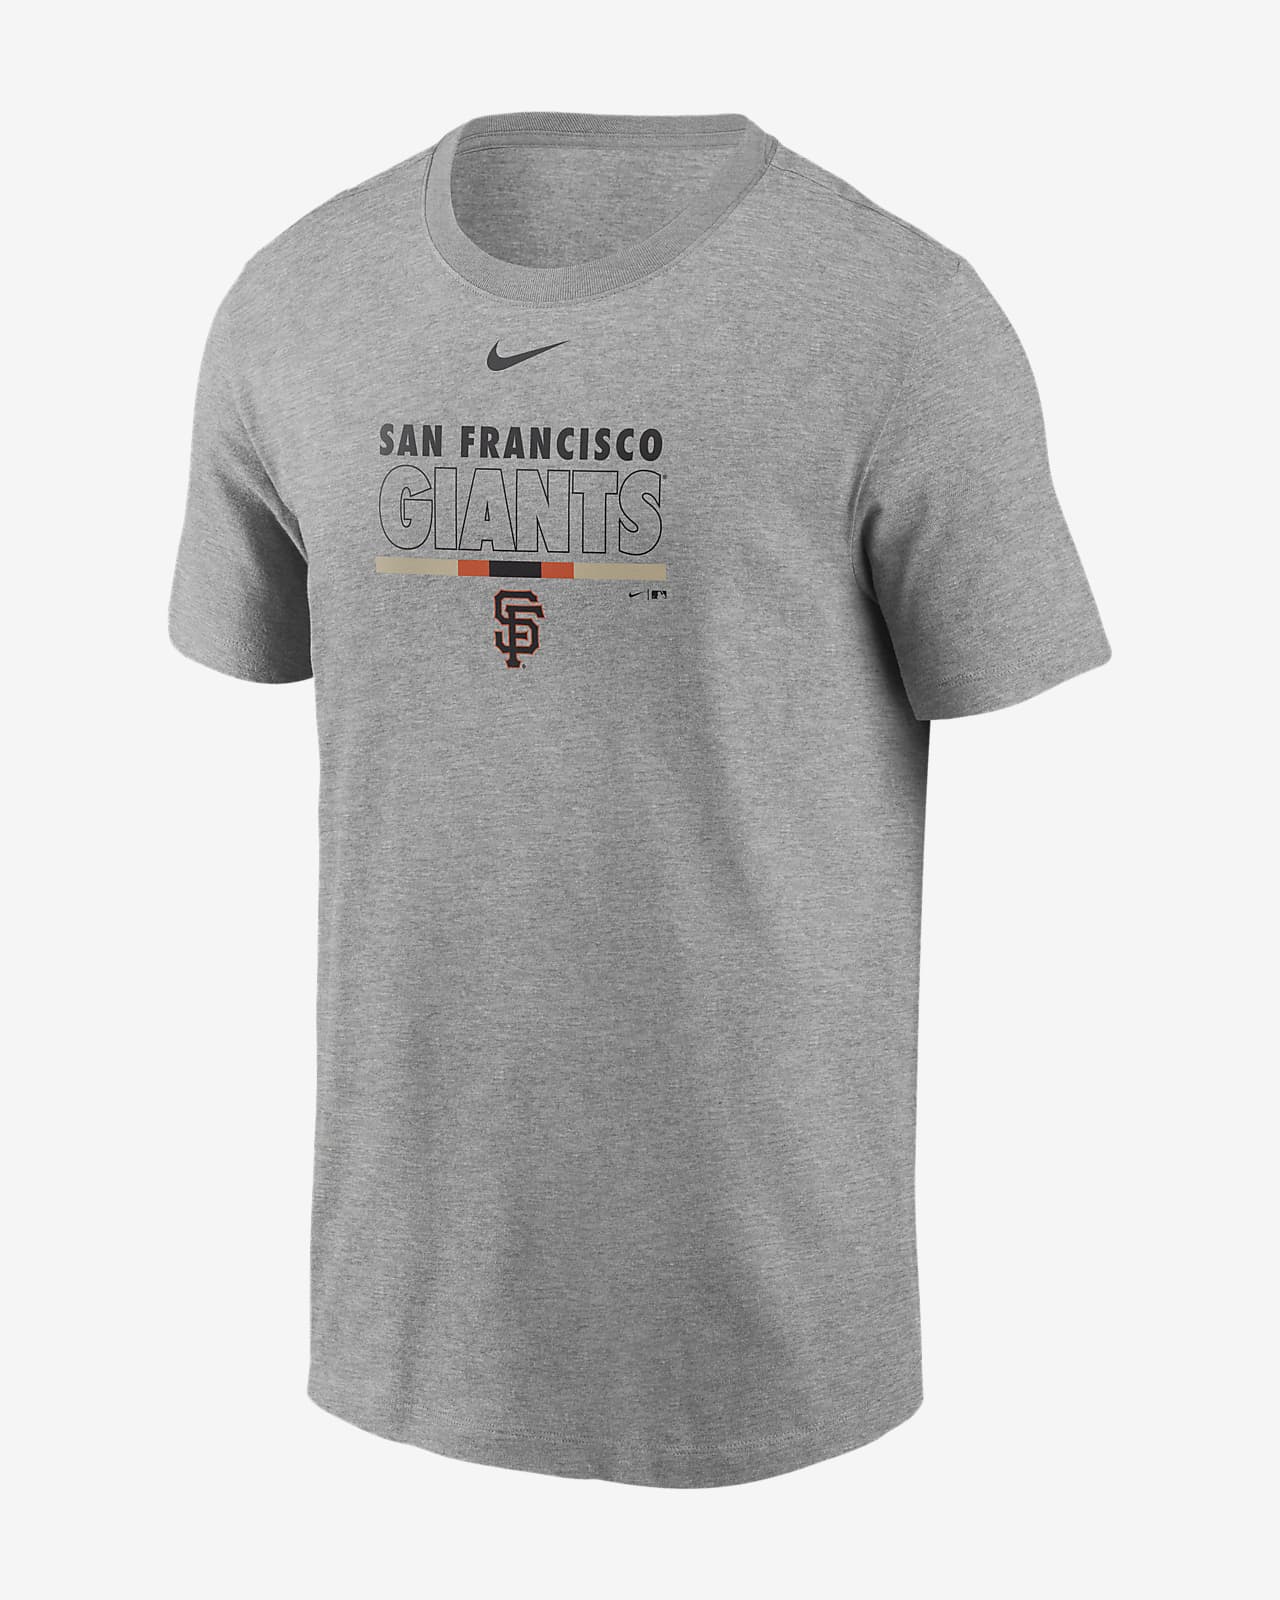 san francisco giants men's t shirt